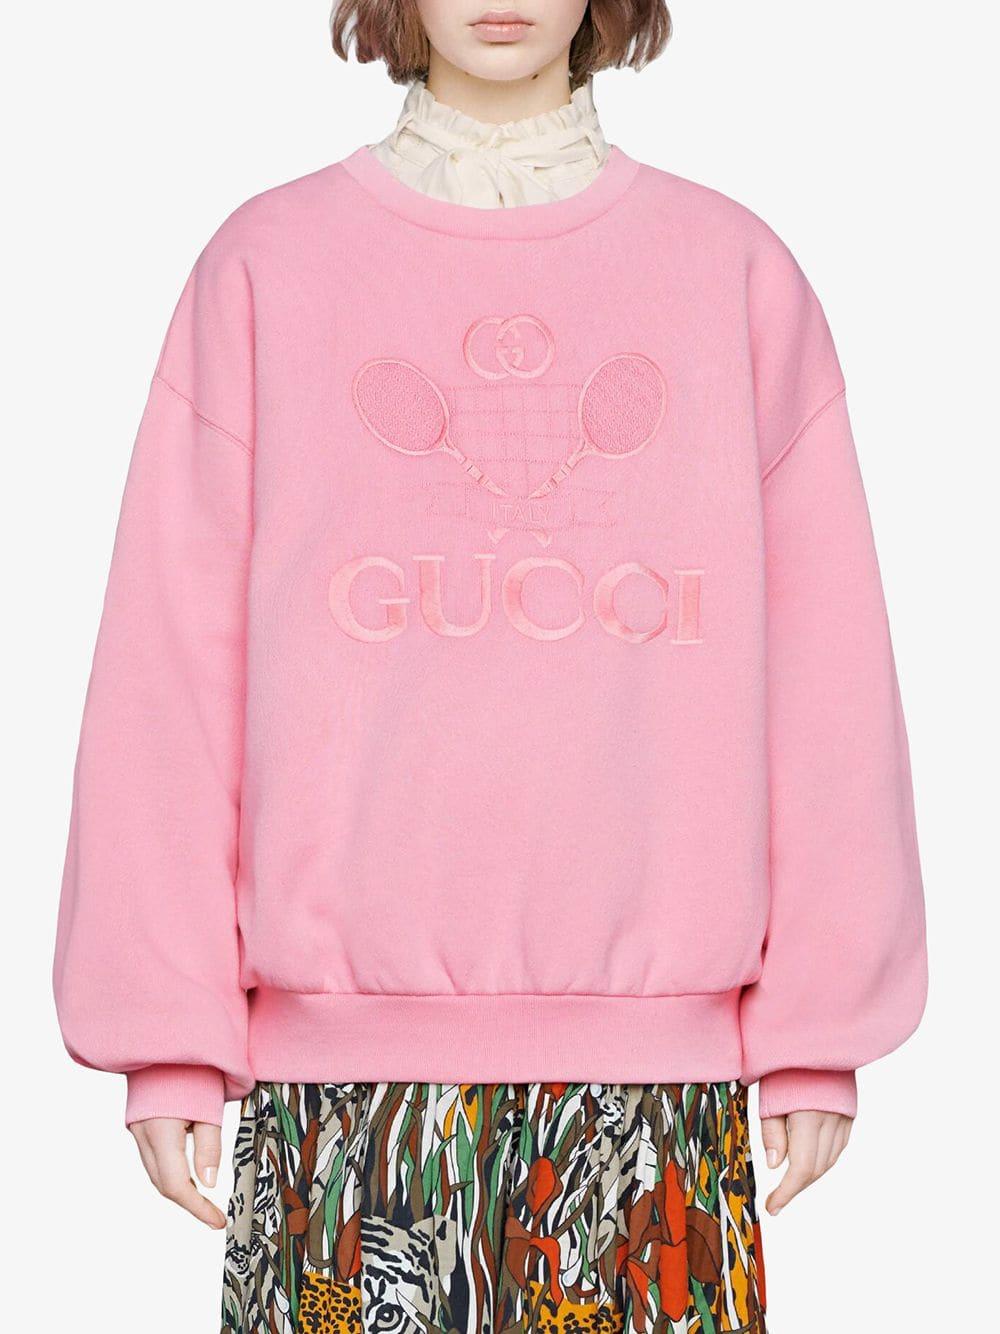 Pink Gucci Sweatshirt Tennis on Sale, SAVE 38% - raptorunderlayment.com